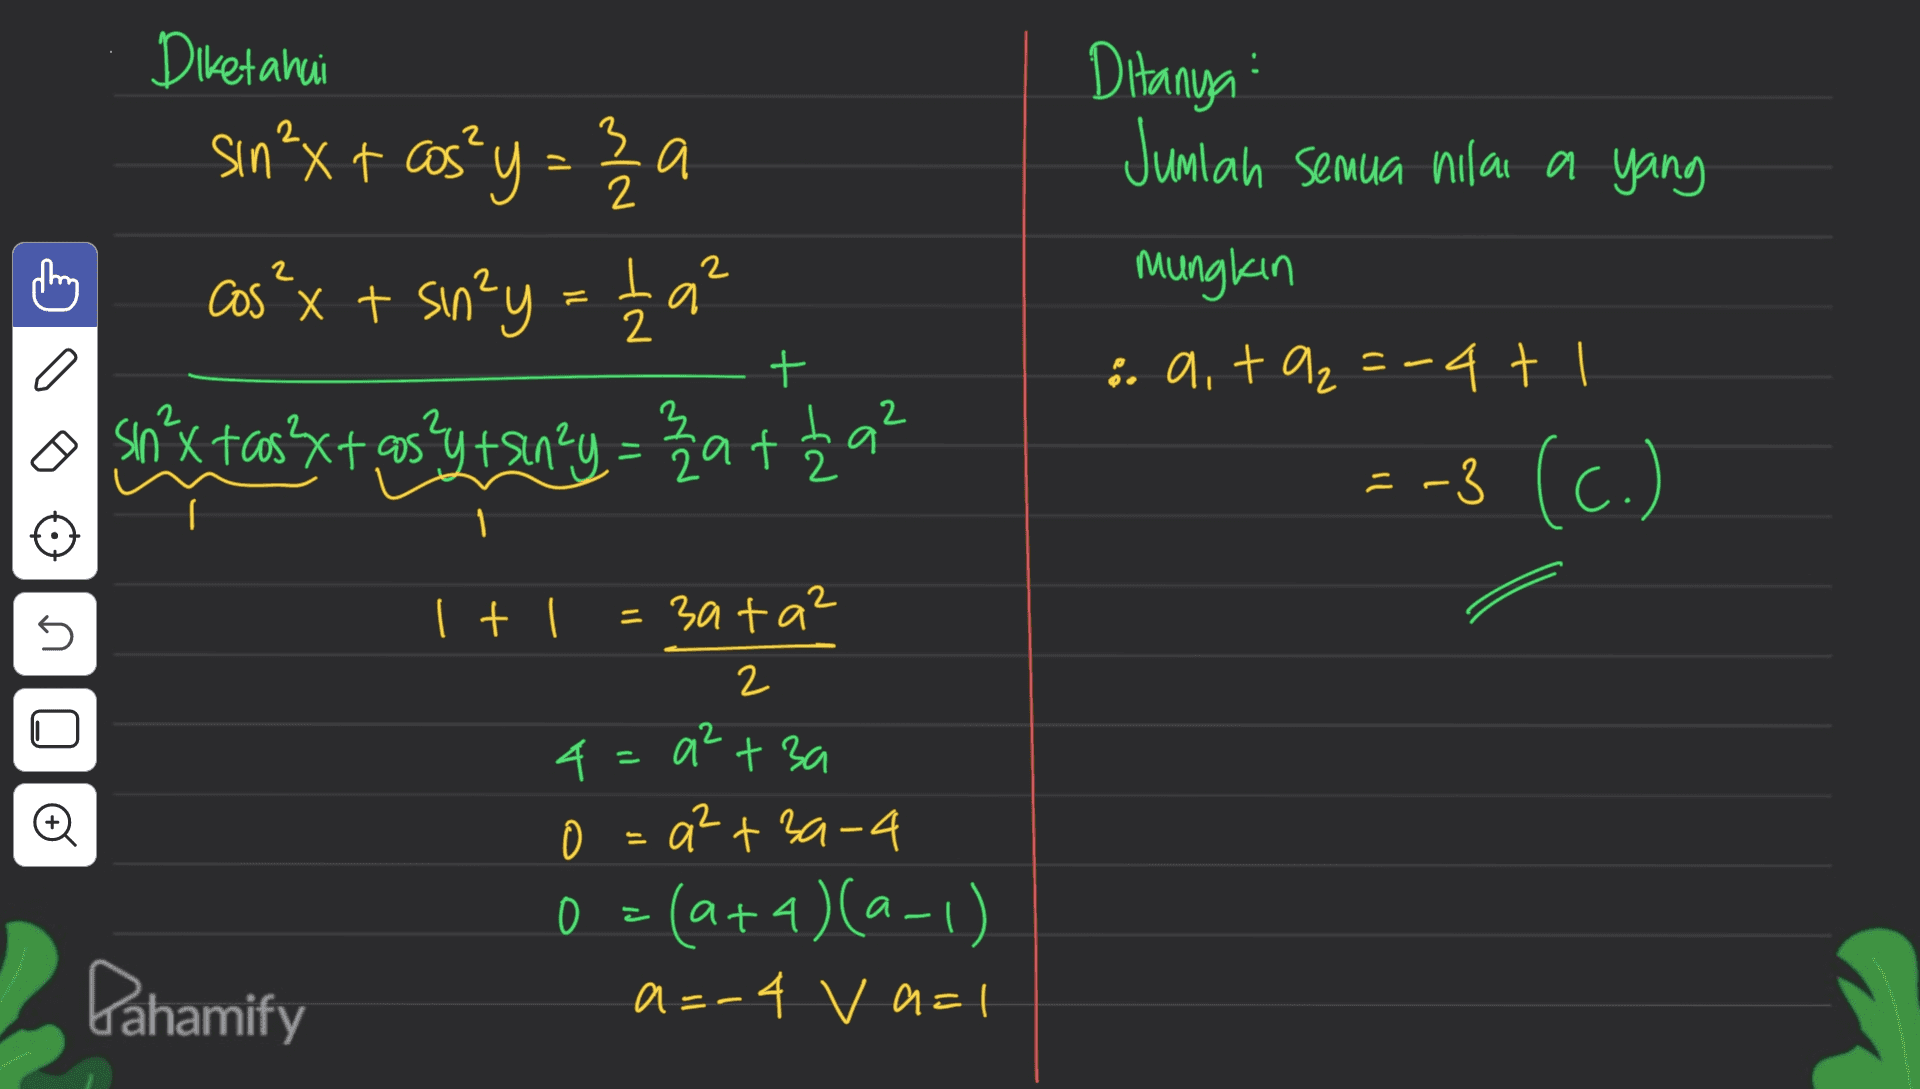 Ditanya Junian semua nilai a yang Diketahui sin ²x + cos²y = 20 cos²x + sin²y = 129 son’x tasxt as?y+an?y = karta? 2 + + mungkin 8. a, t =-4 t 1 = -3 (c.) I + 1 = 3ata? U 2 U 2 4 a 0 = a +3a-4 0 = (a + 1)(a-1) a=-4 v a=1 Pahamify 